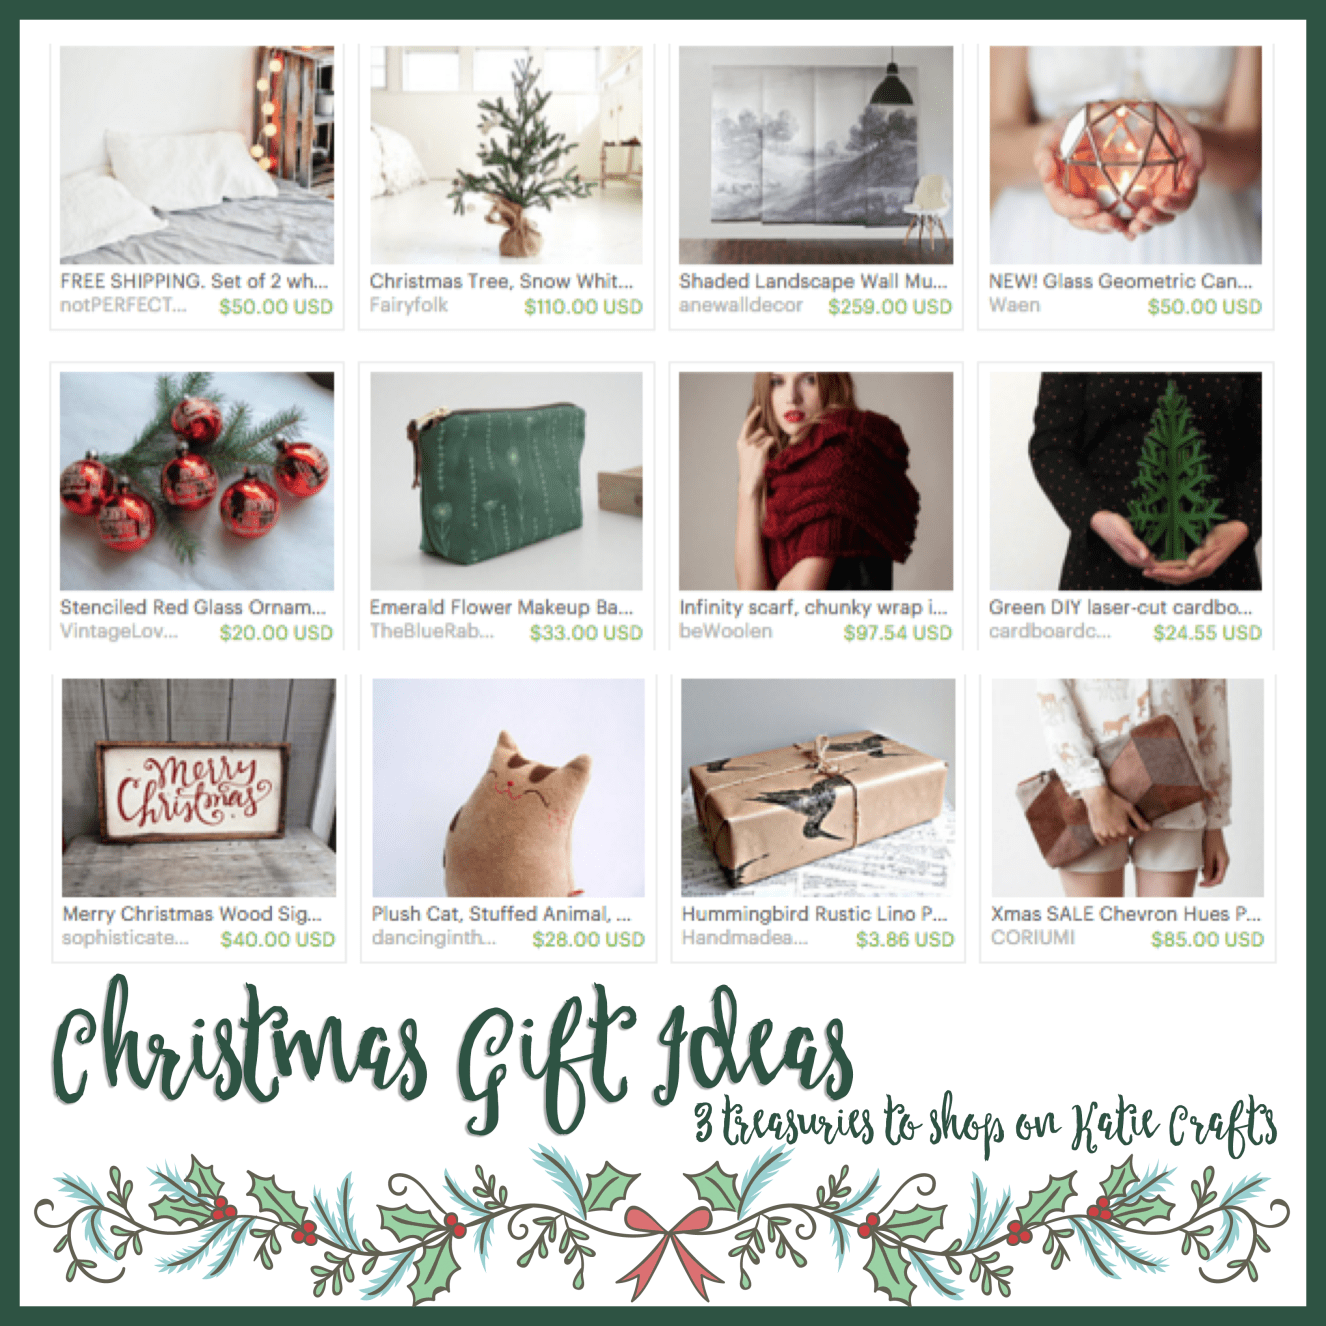 Christmas Gift Ideas on Katie Crafts; https://www.katiecrafts.com